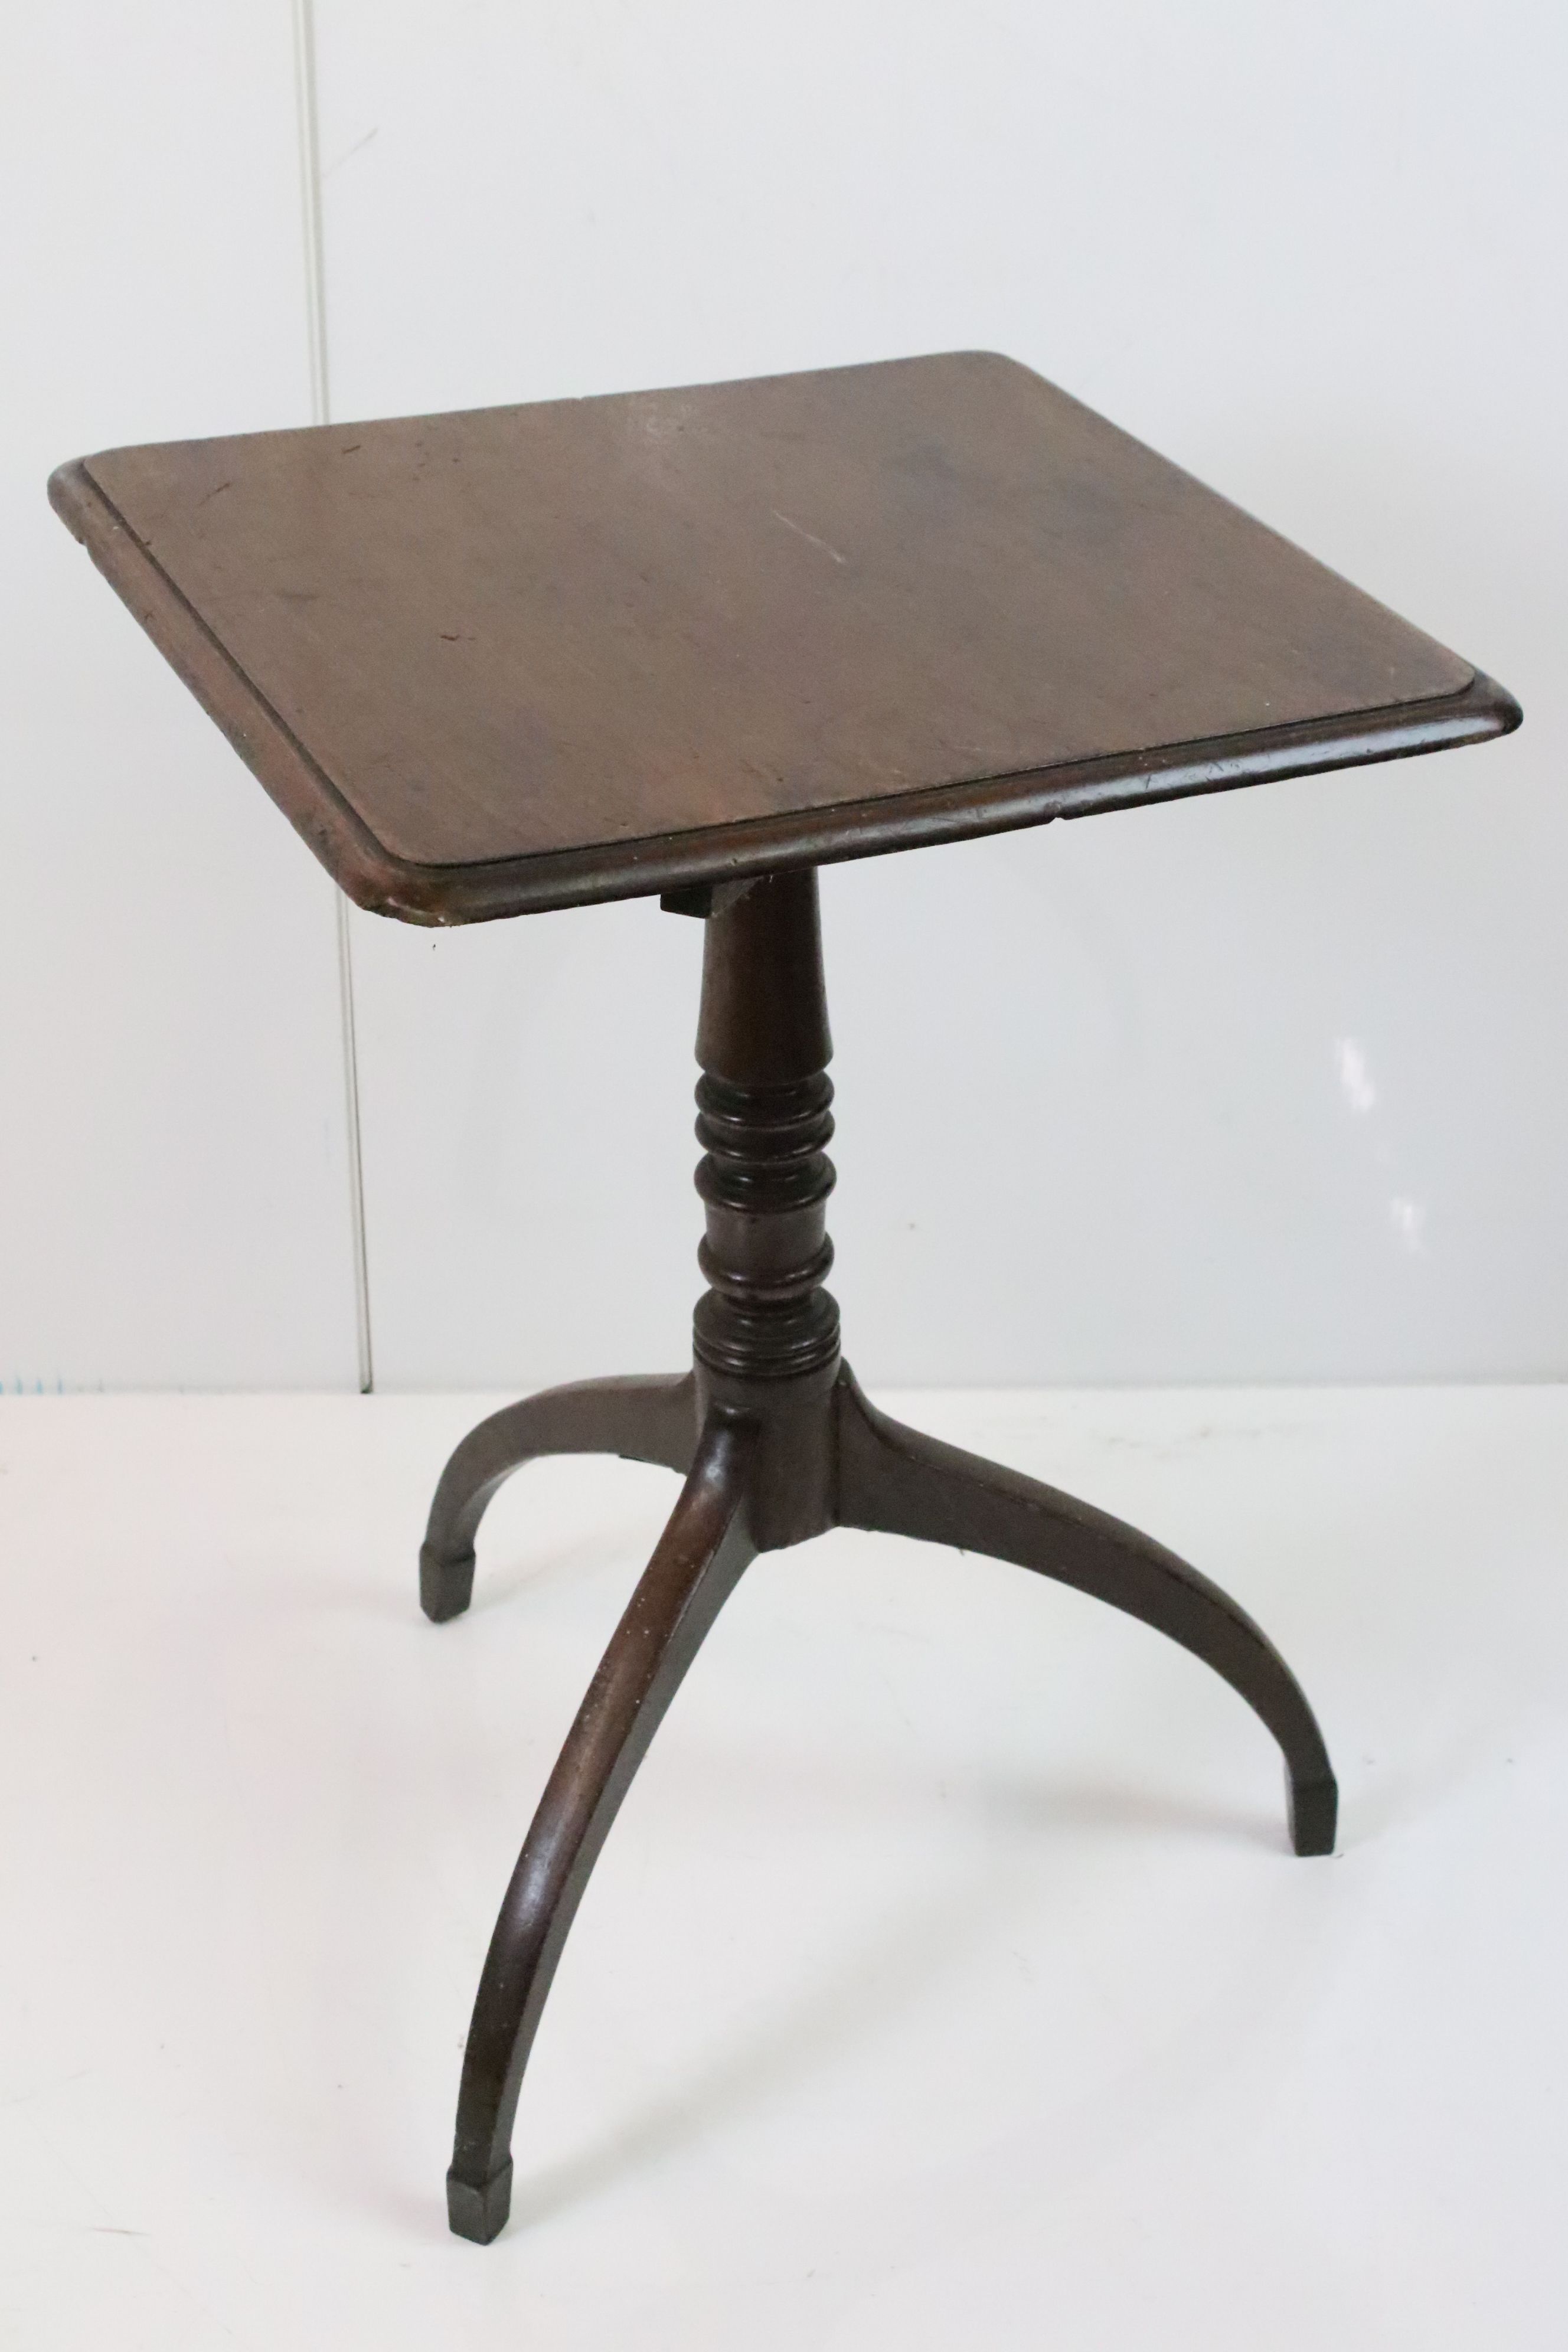 George III Mahogany Square Tilt Top Table, raised on a turned pedestal with three down swept legs,